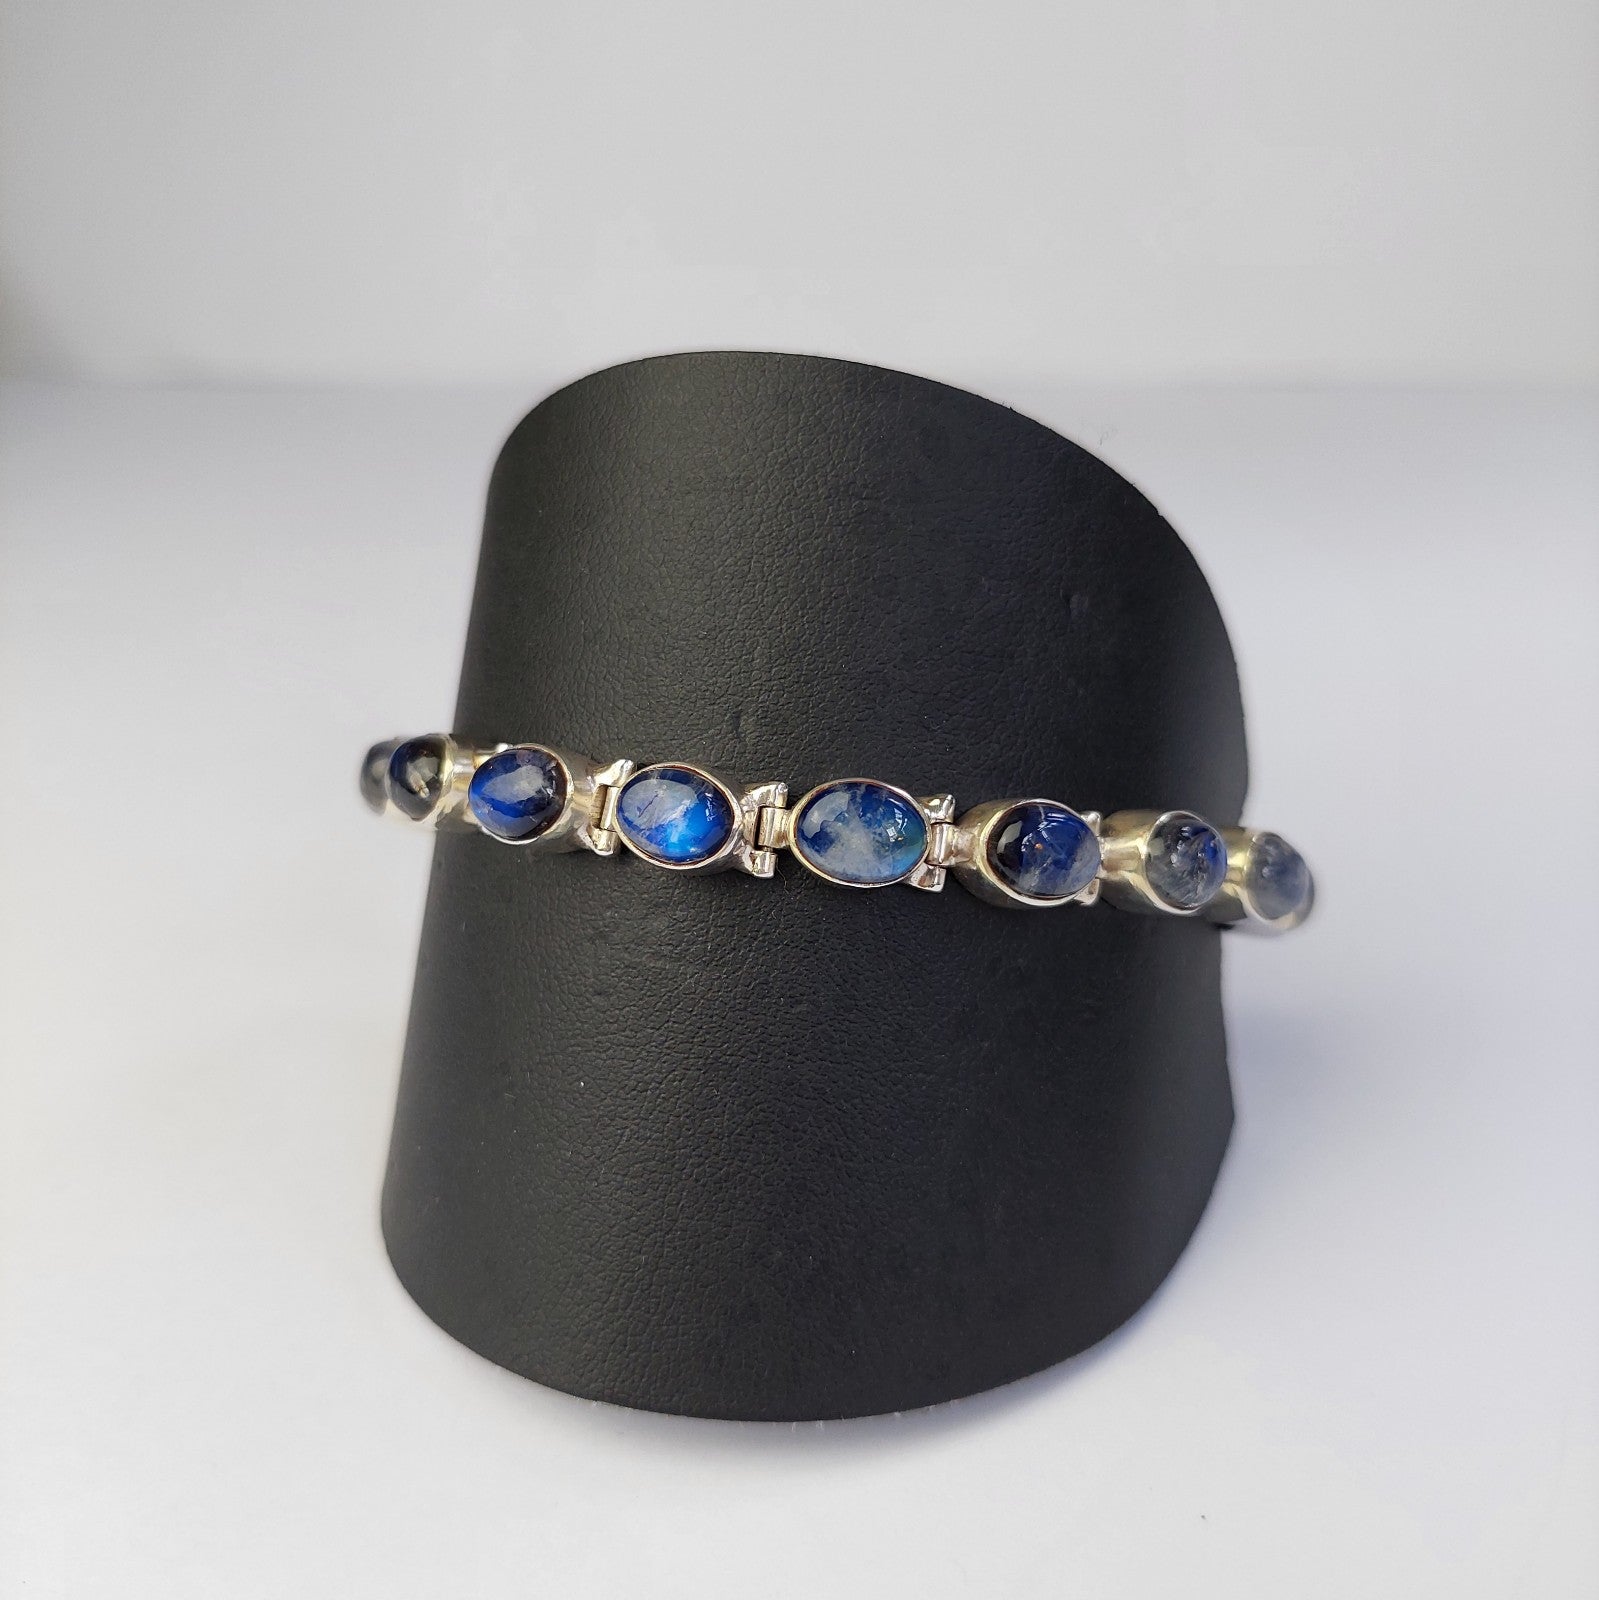 Blue Moonstone Bracelet - The Nancy Smillie Shop - Art, Jewellery & Designer Gifts Glasgow